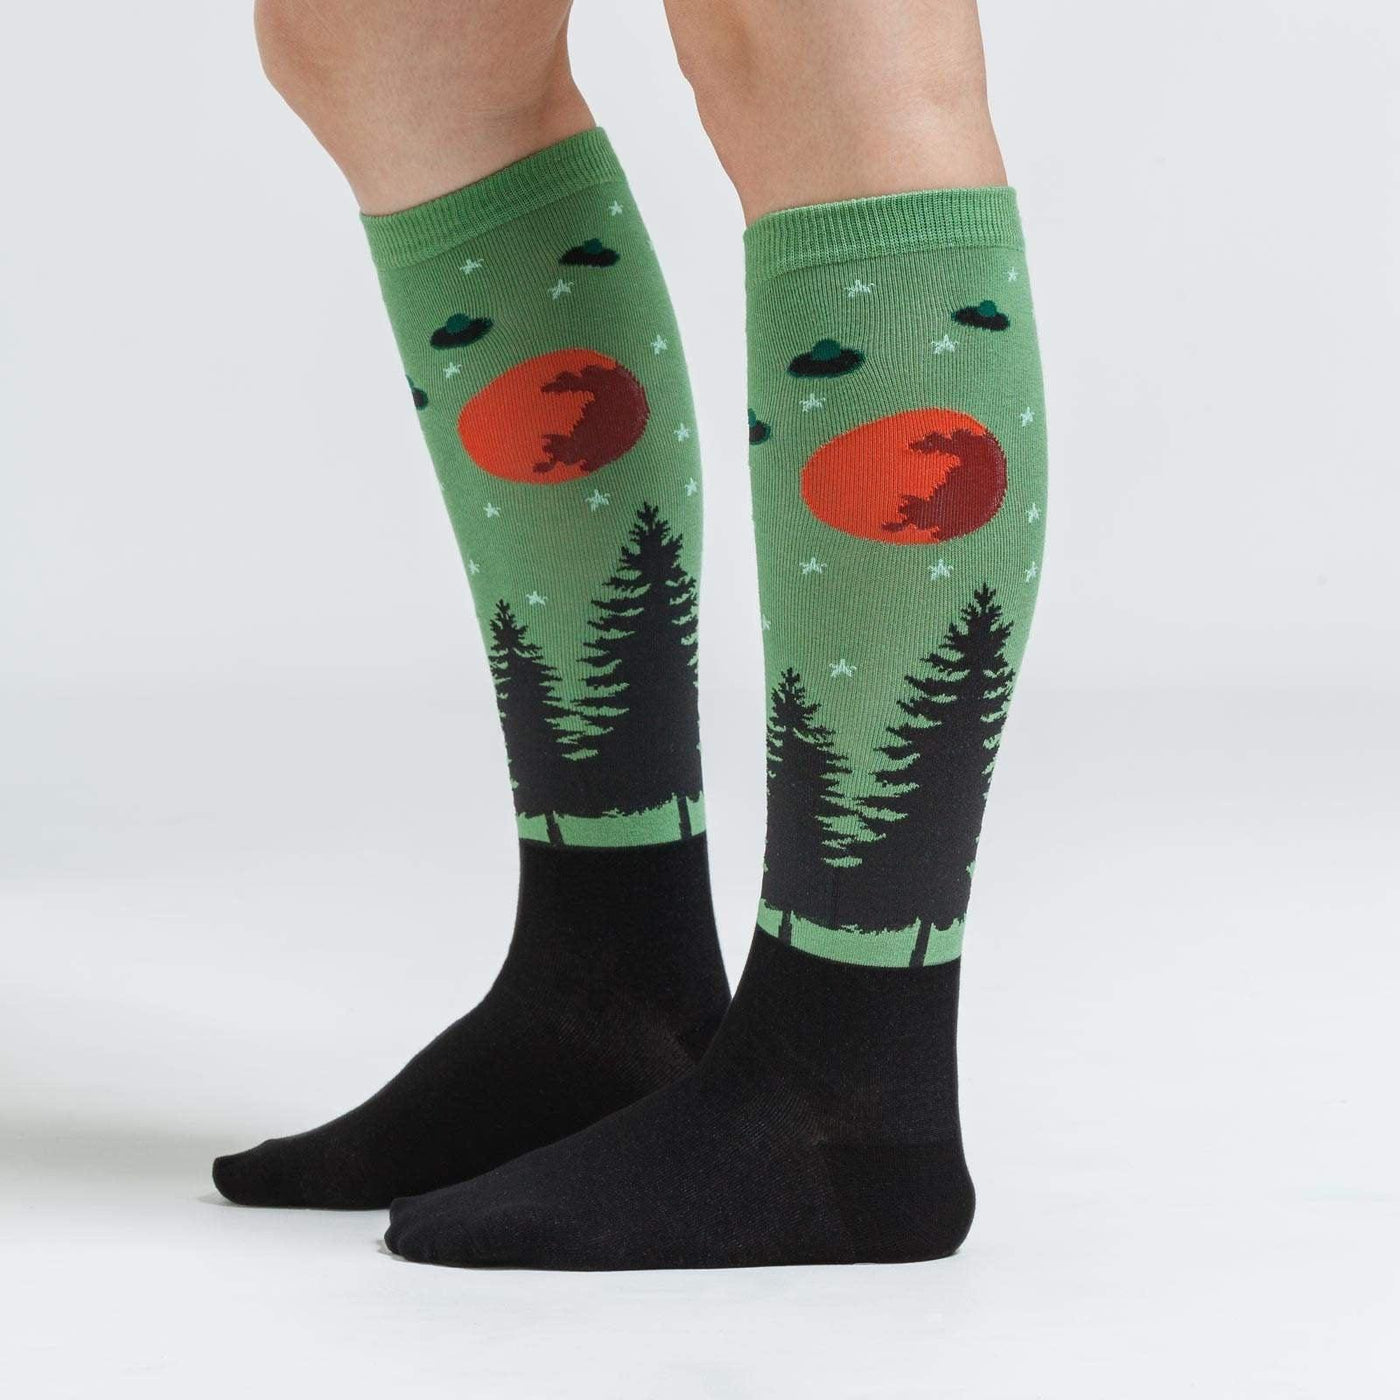 I Believe, Women's Knee-high - Sock It To Me - The Sock Monster